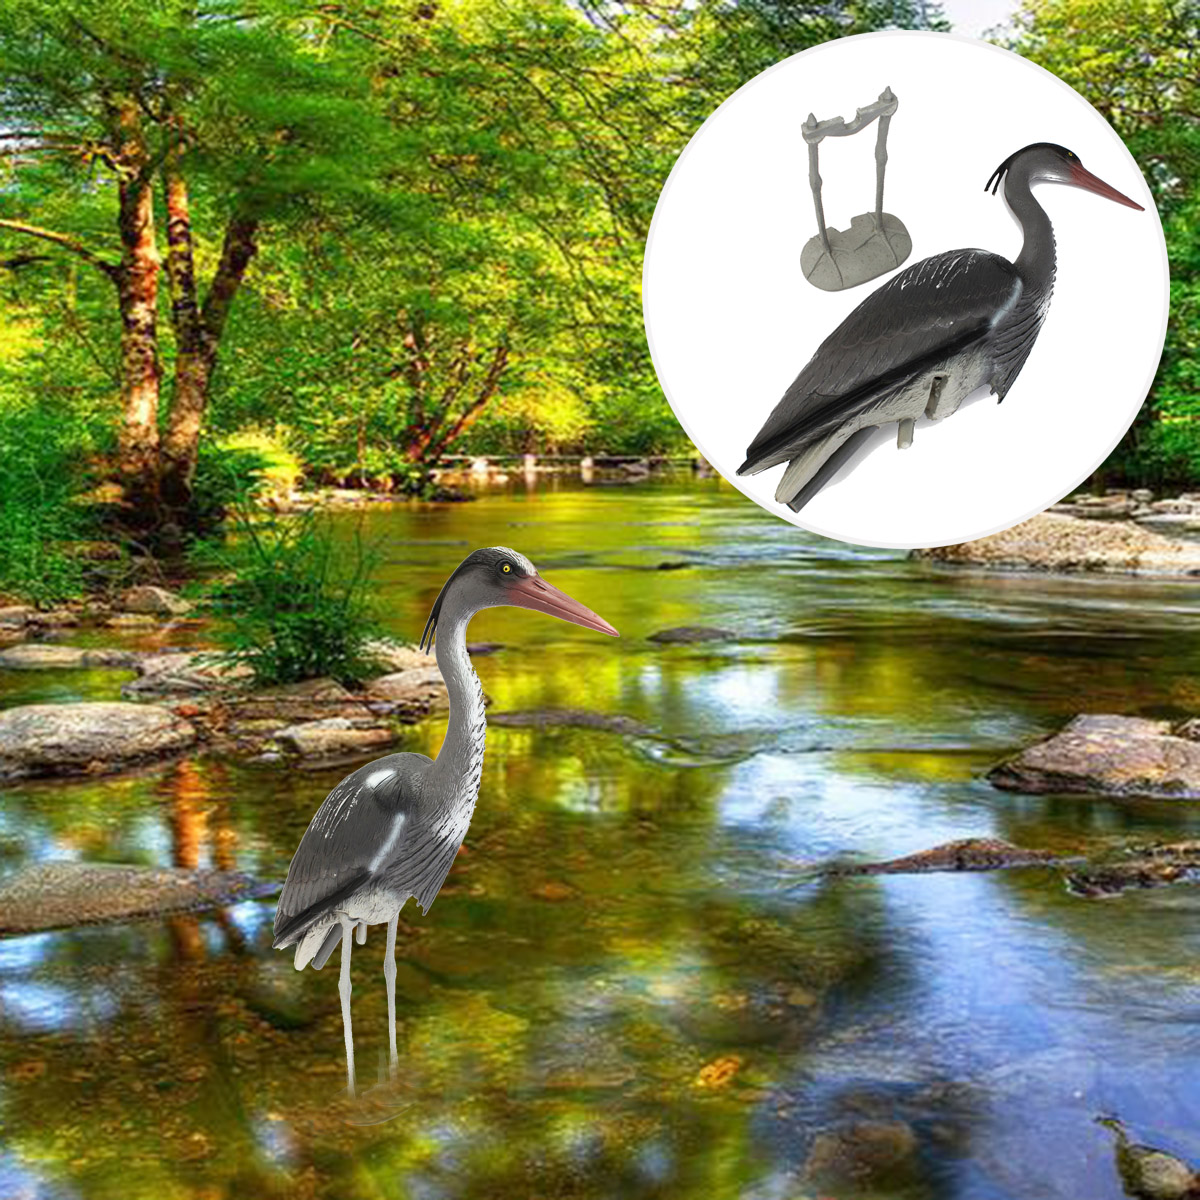 Large-Plastic-Resin-Decoy-Heron-Garden-Decorations-Bird-Scarer-Fish-Pond-Koi--Decorations-1001076-2